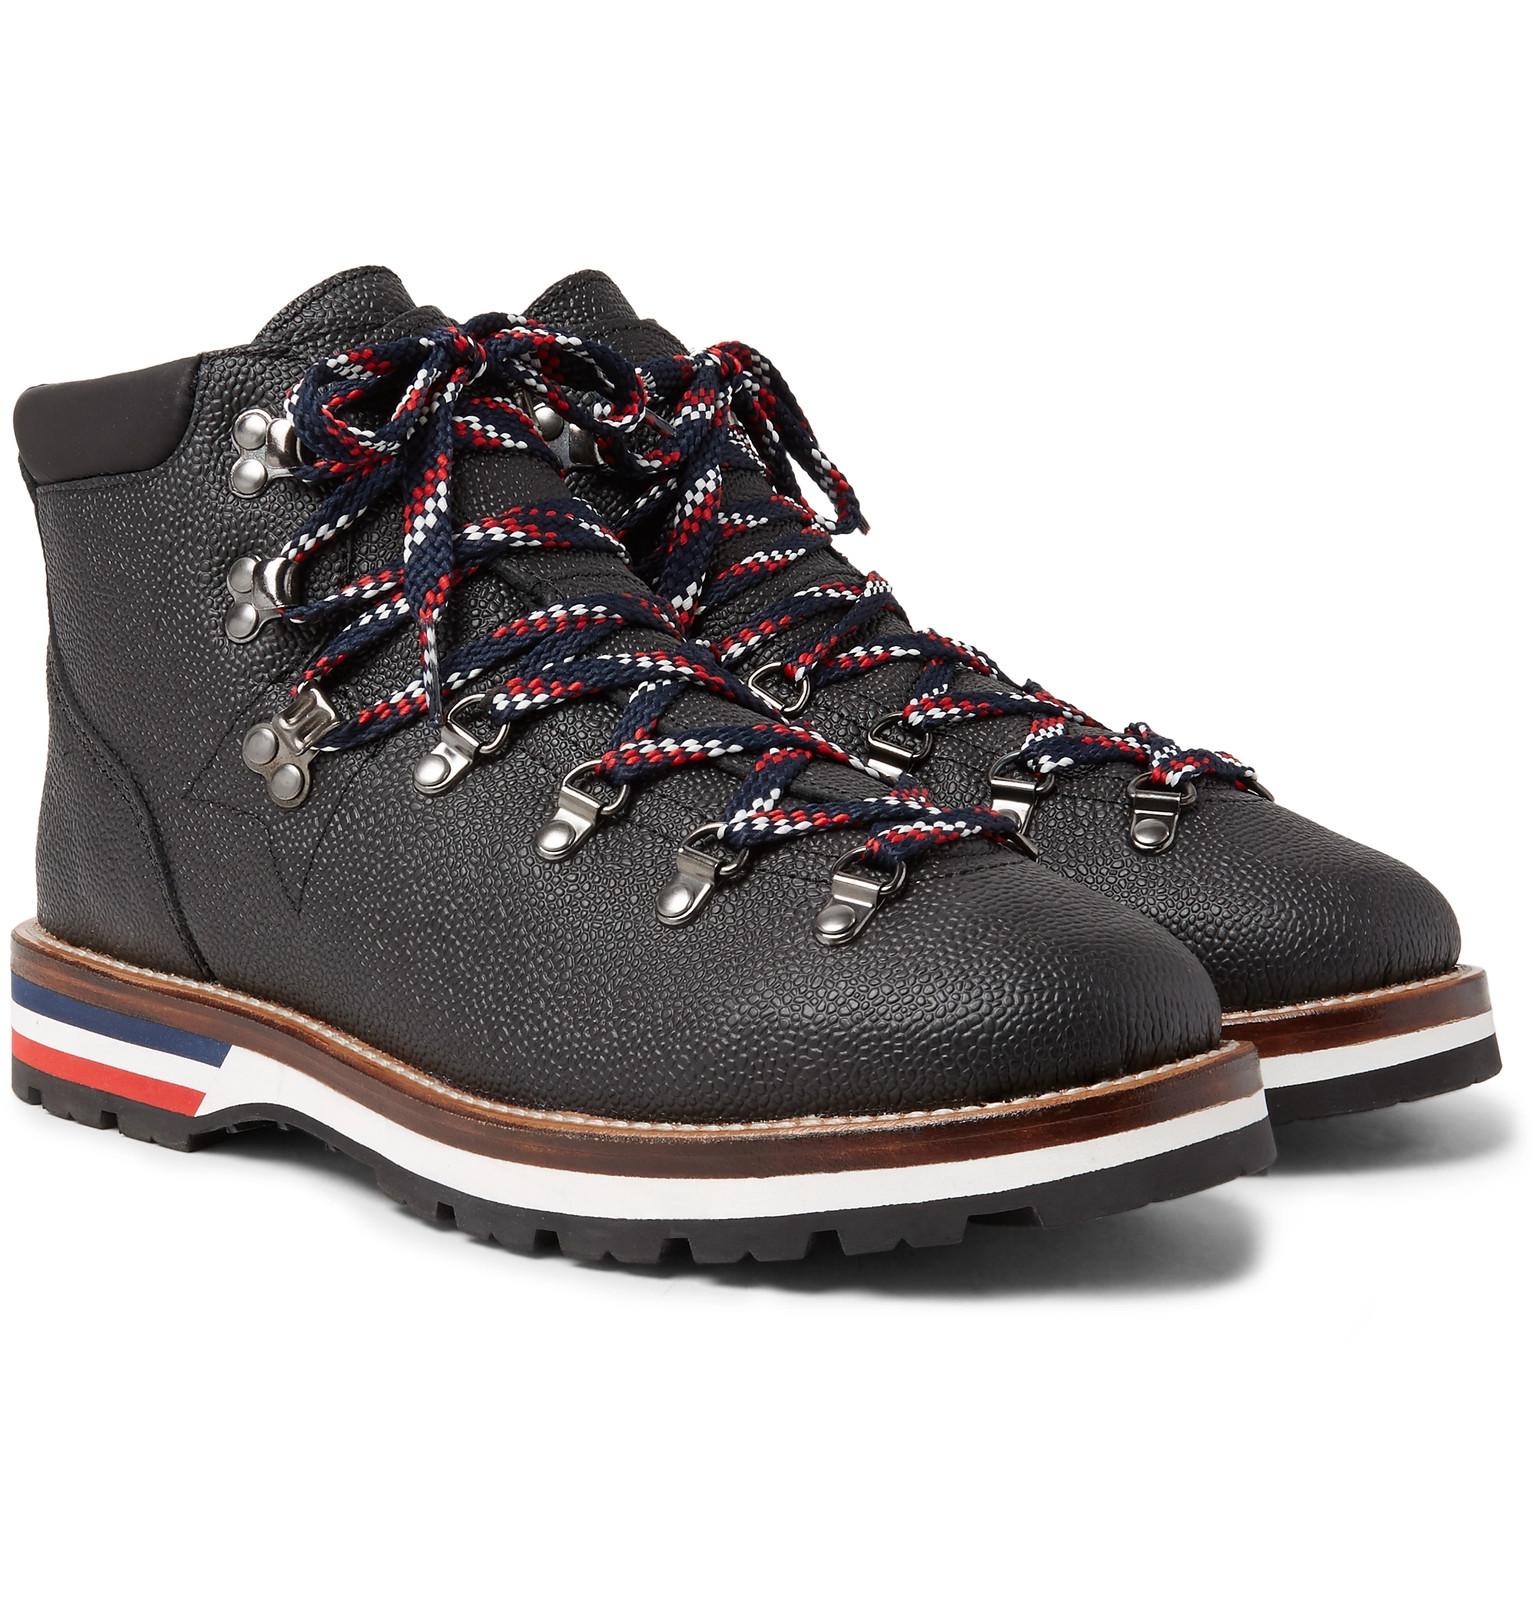 Moncler Peak Pebble-grain Leather Hiking Boots in Black for Men - Lyst